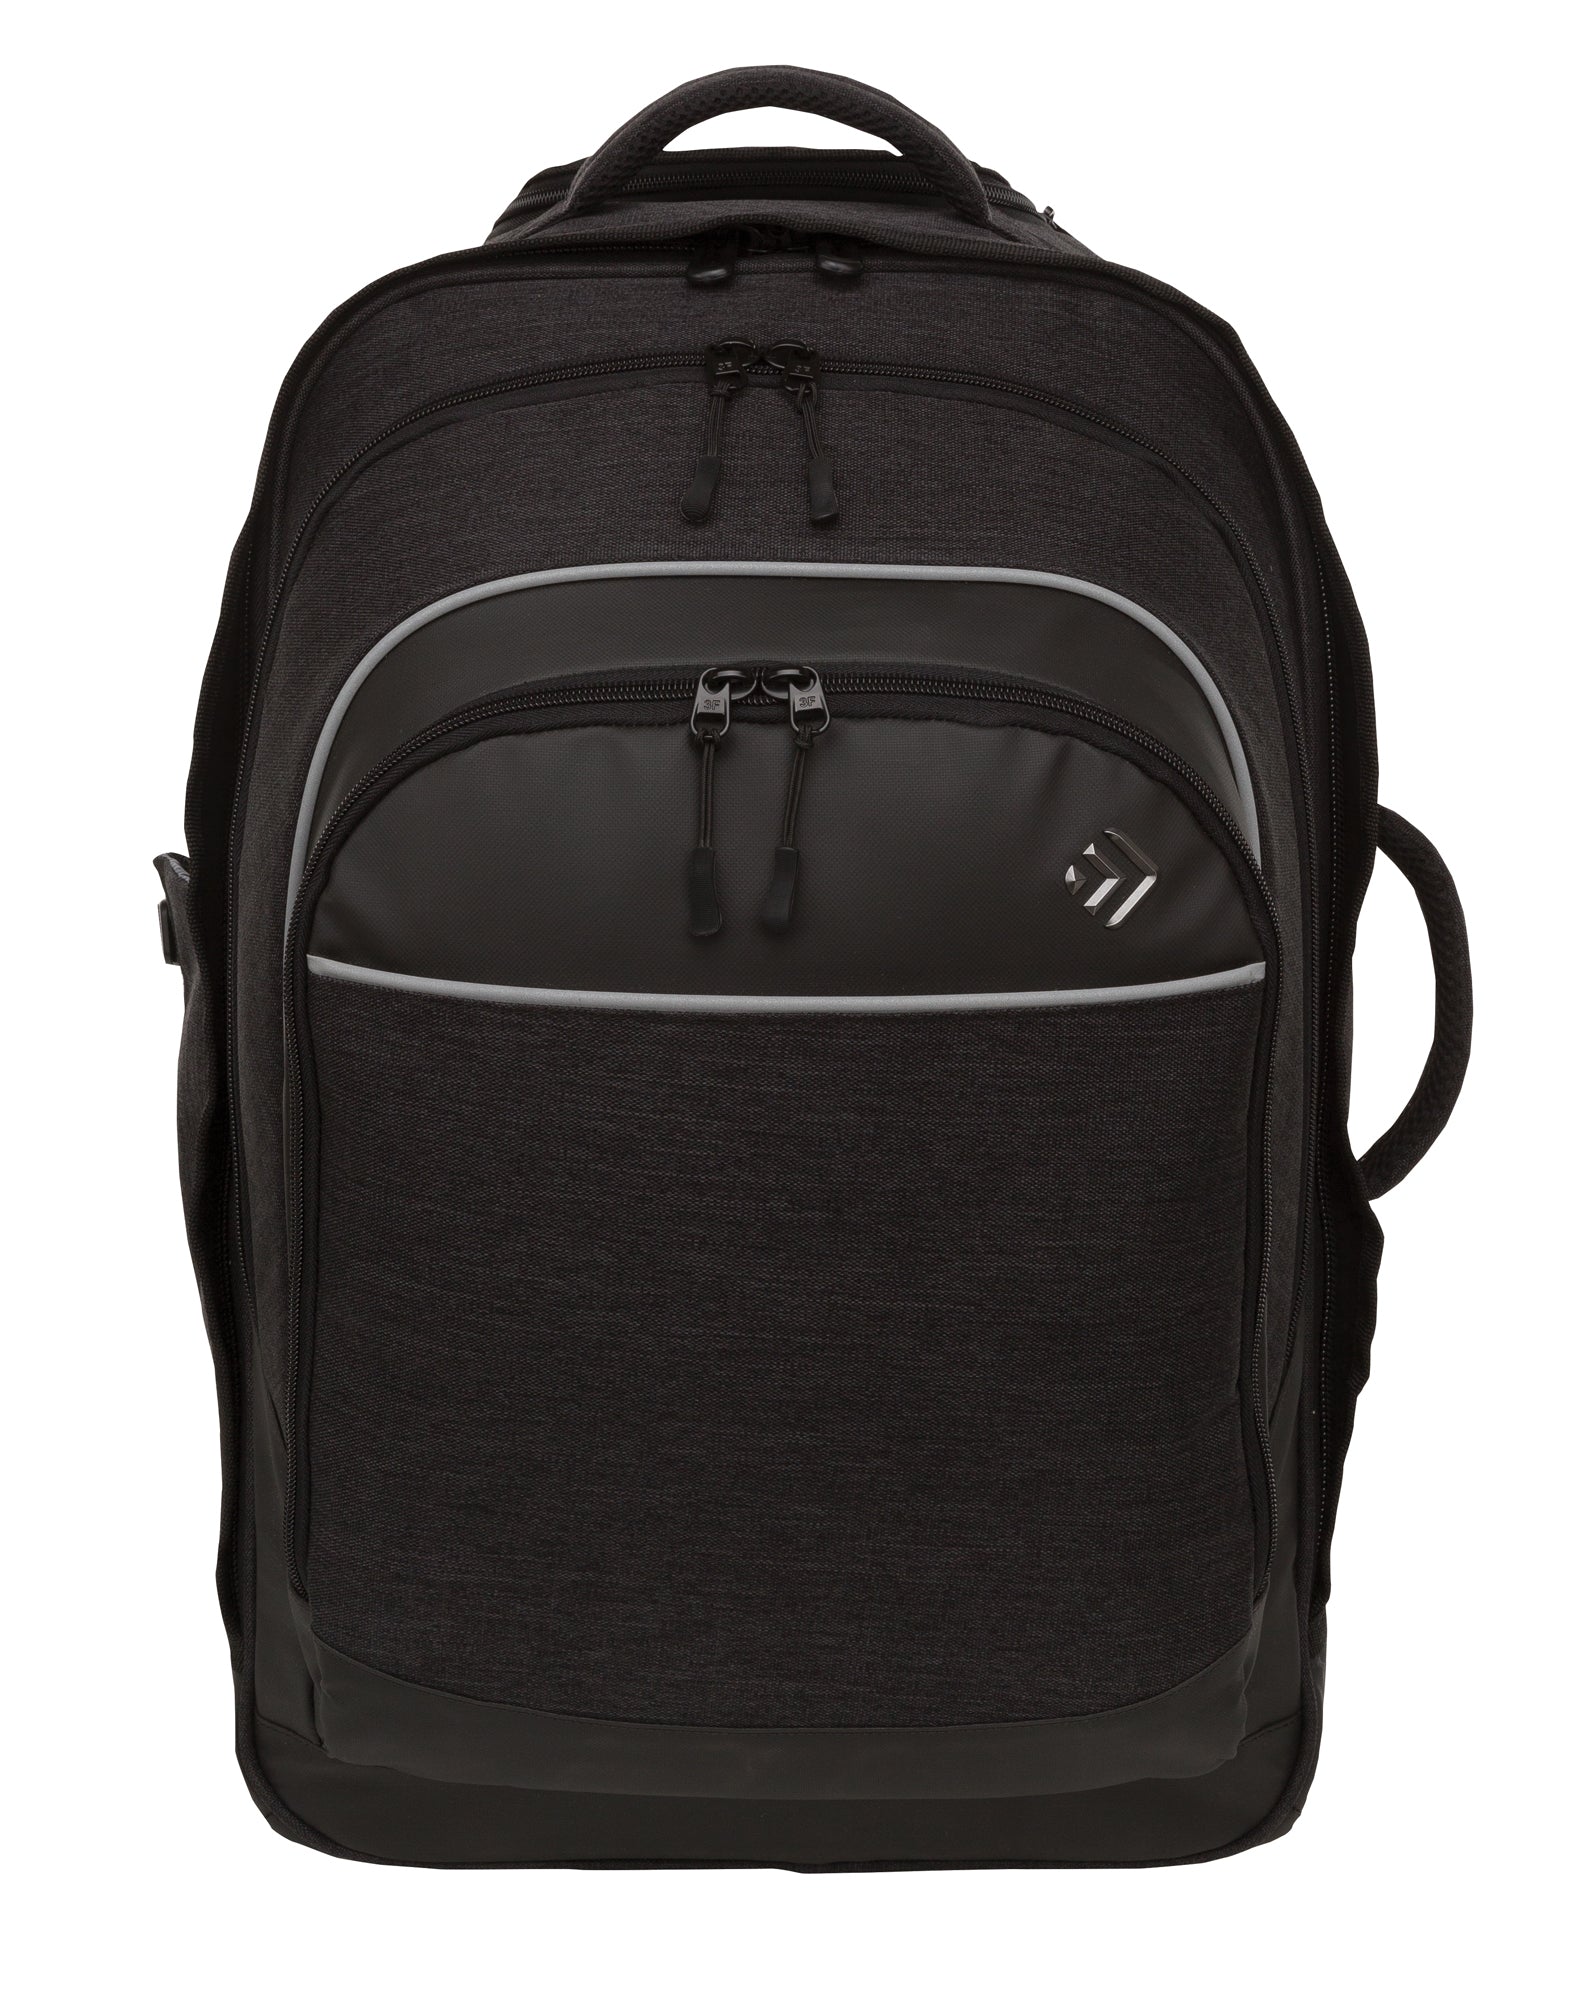 Voyager Rolling Backpack